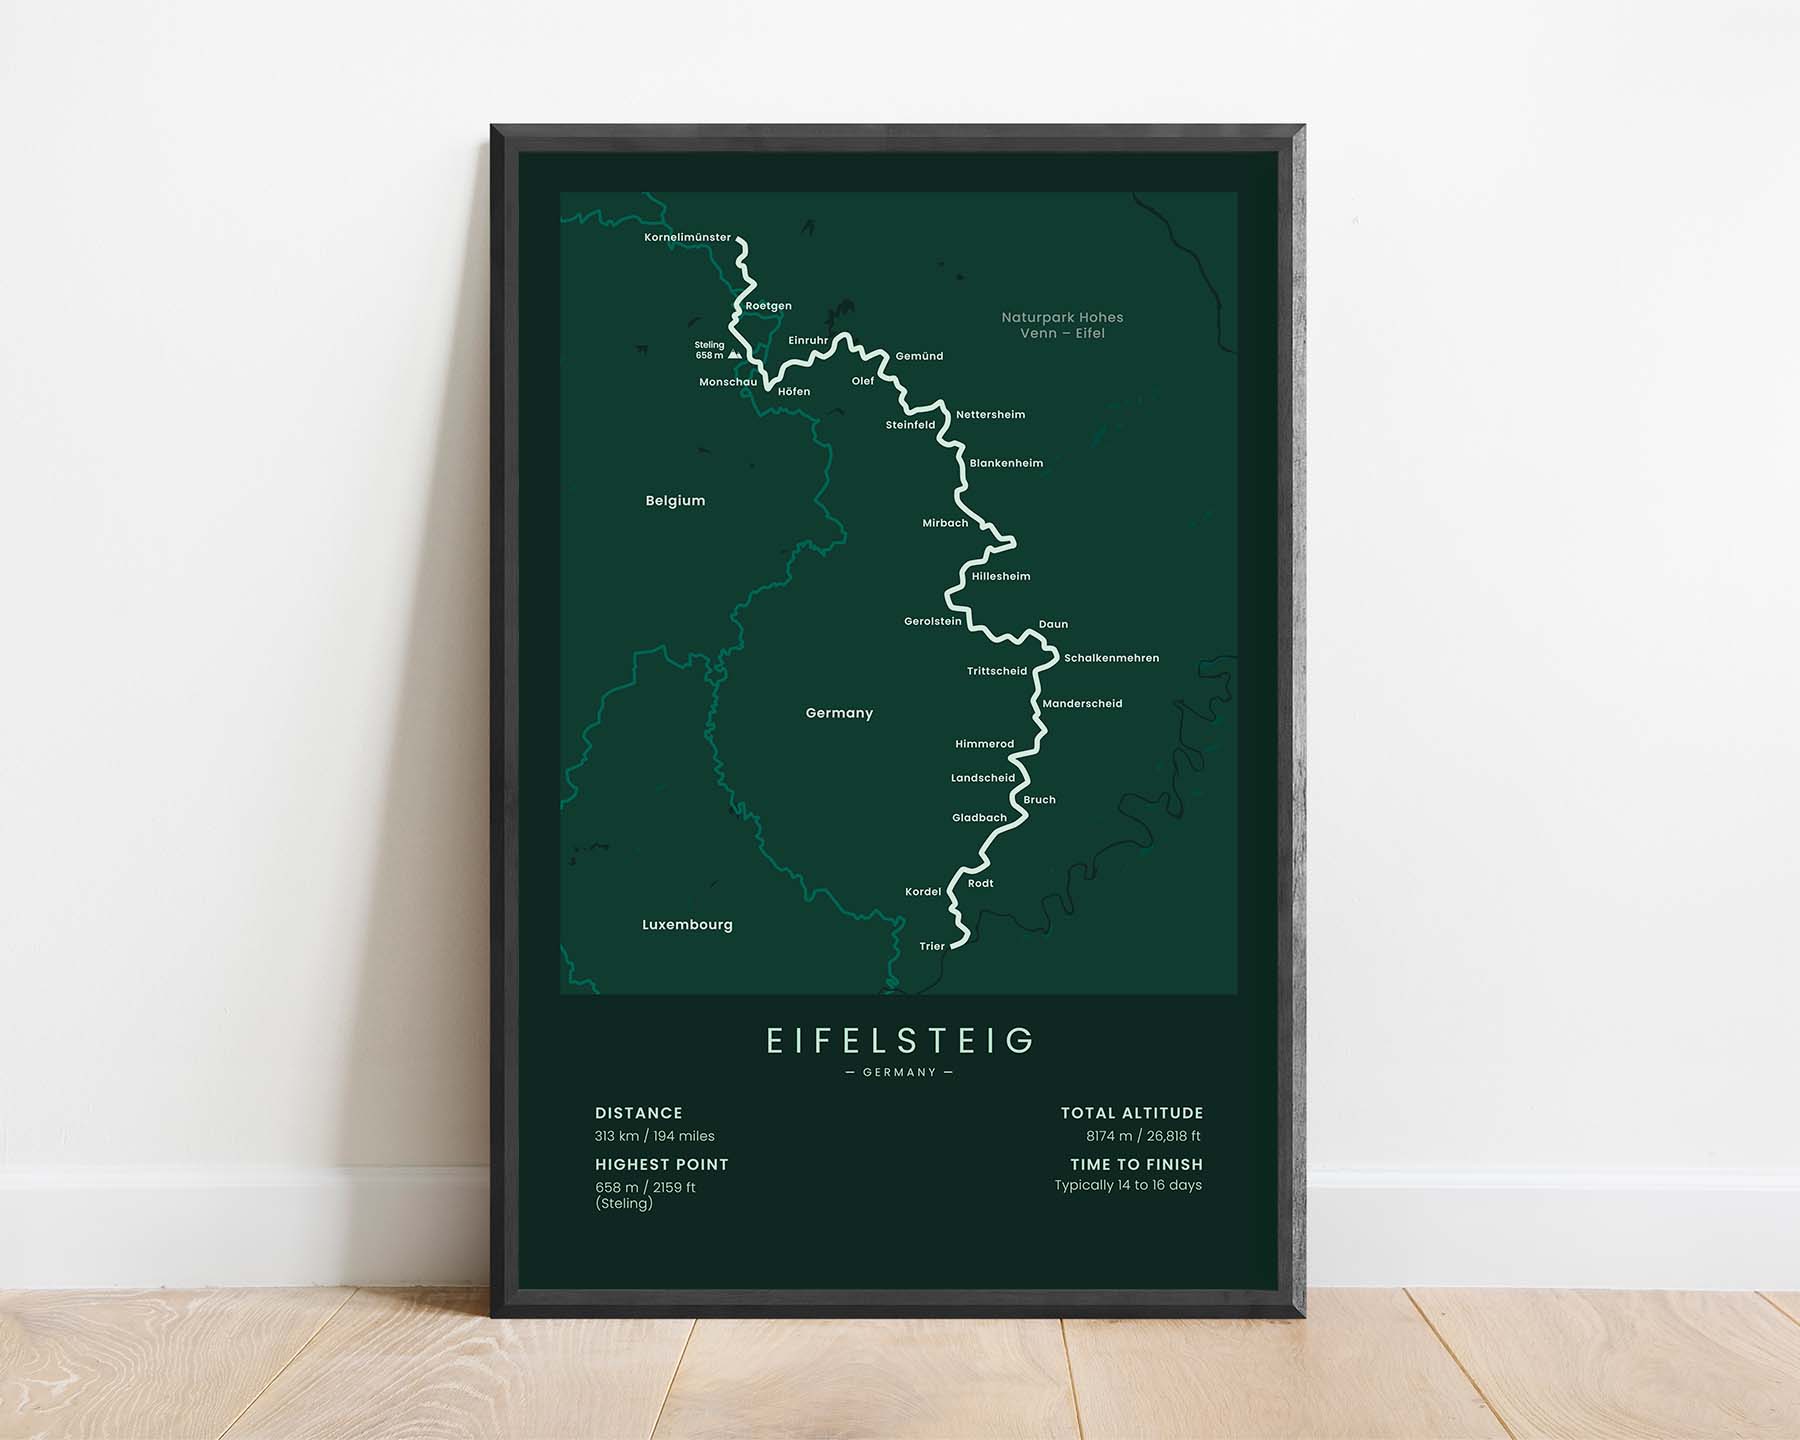 Eifelsteig (Aachen to Trier, North Rhine-Westphalia, Rhineland Palatinate, Germany, Eifel National Park) Trek Map Art with Green Background